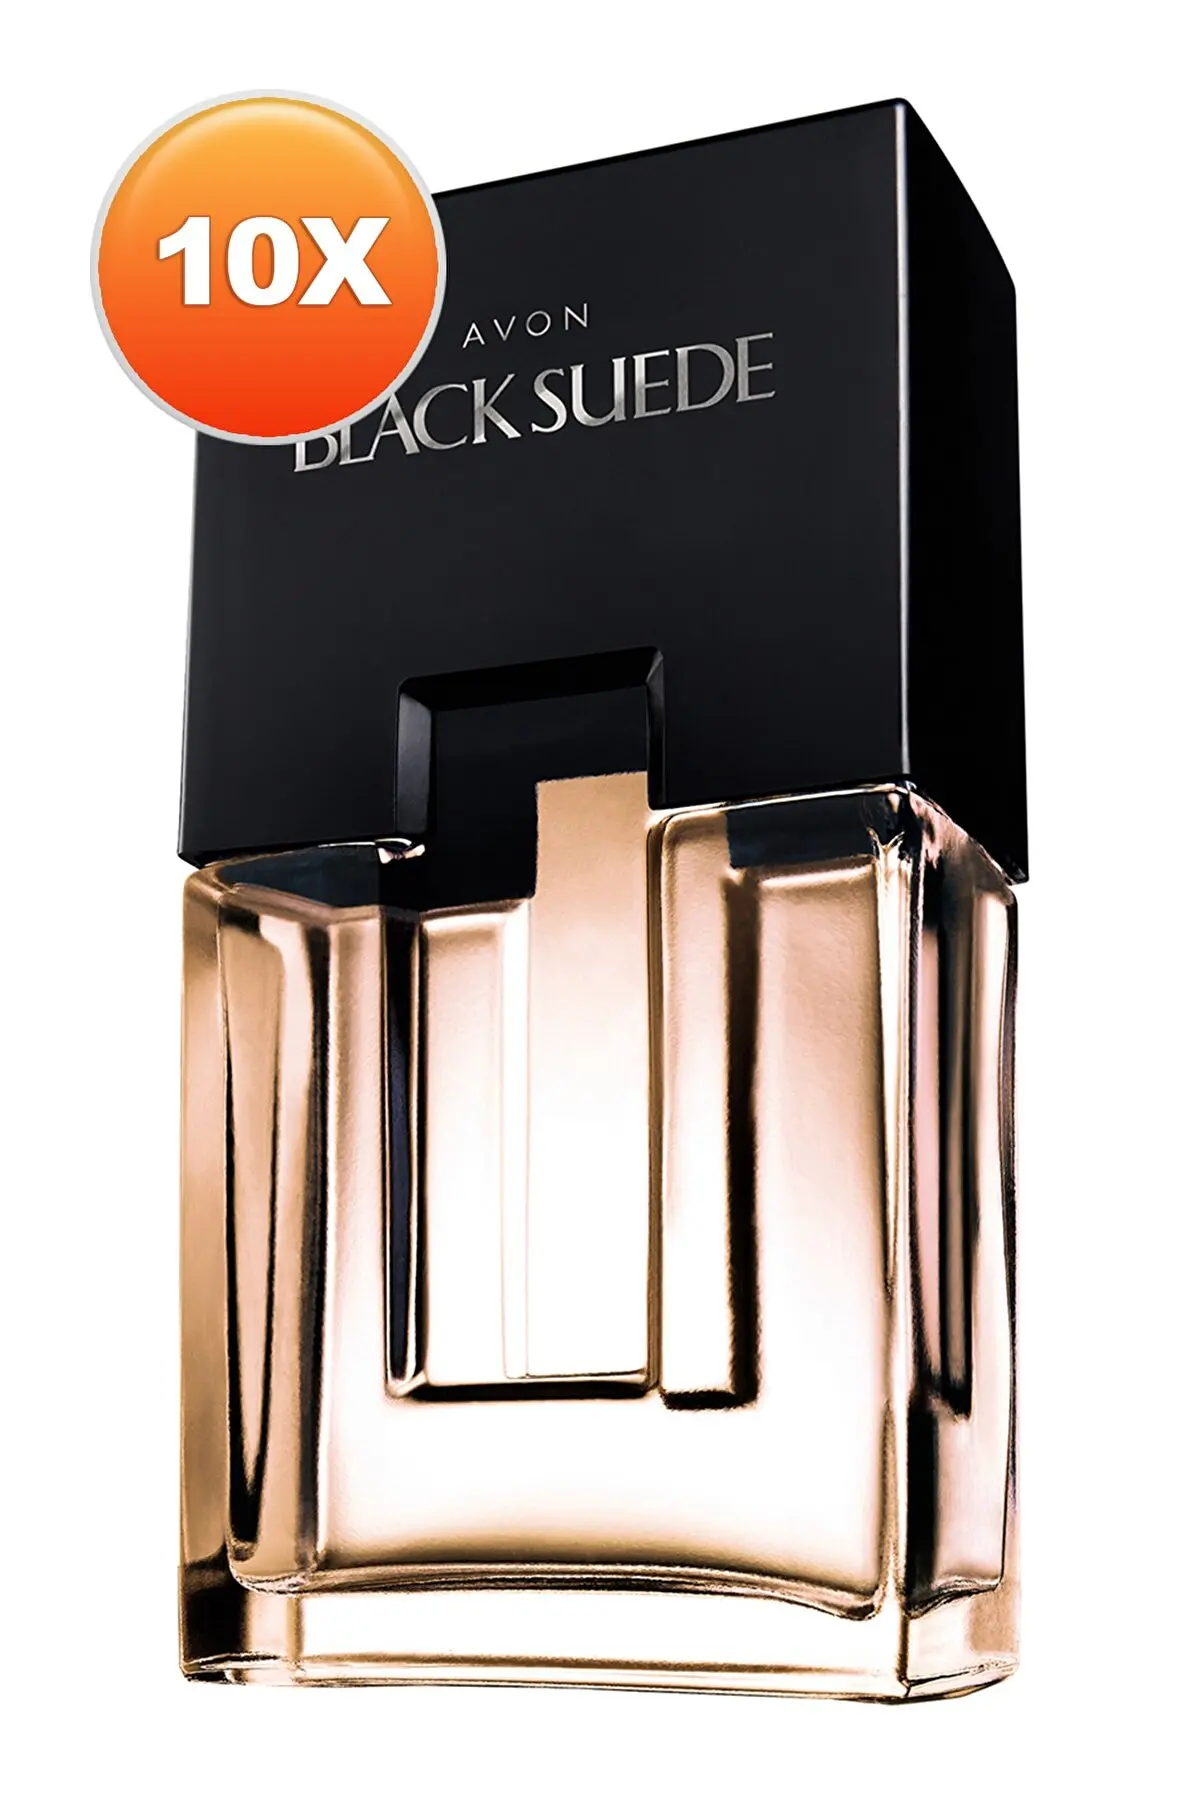 Avon Black Suede Men's Perfume Edt 75 ml Set of 10 50500000104081